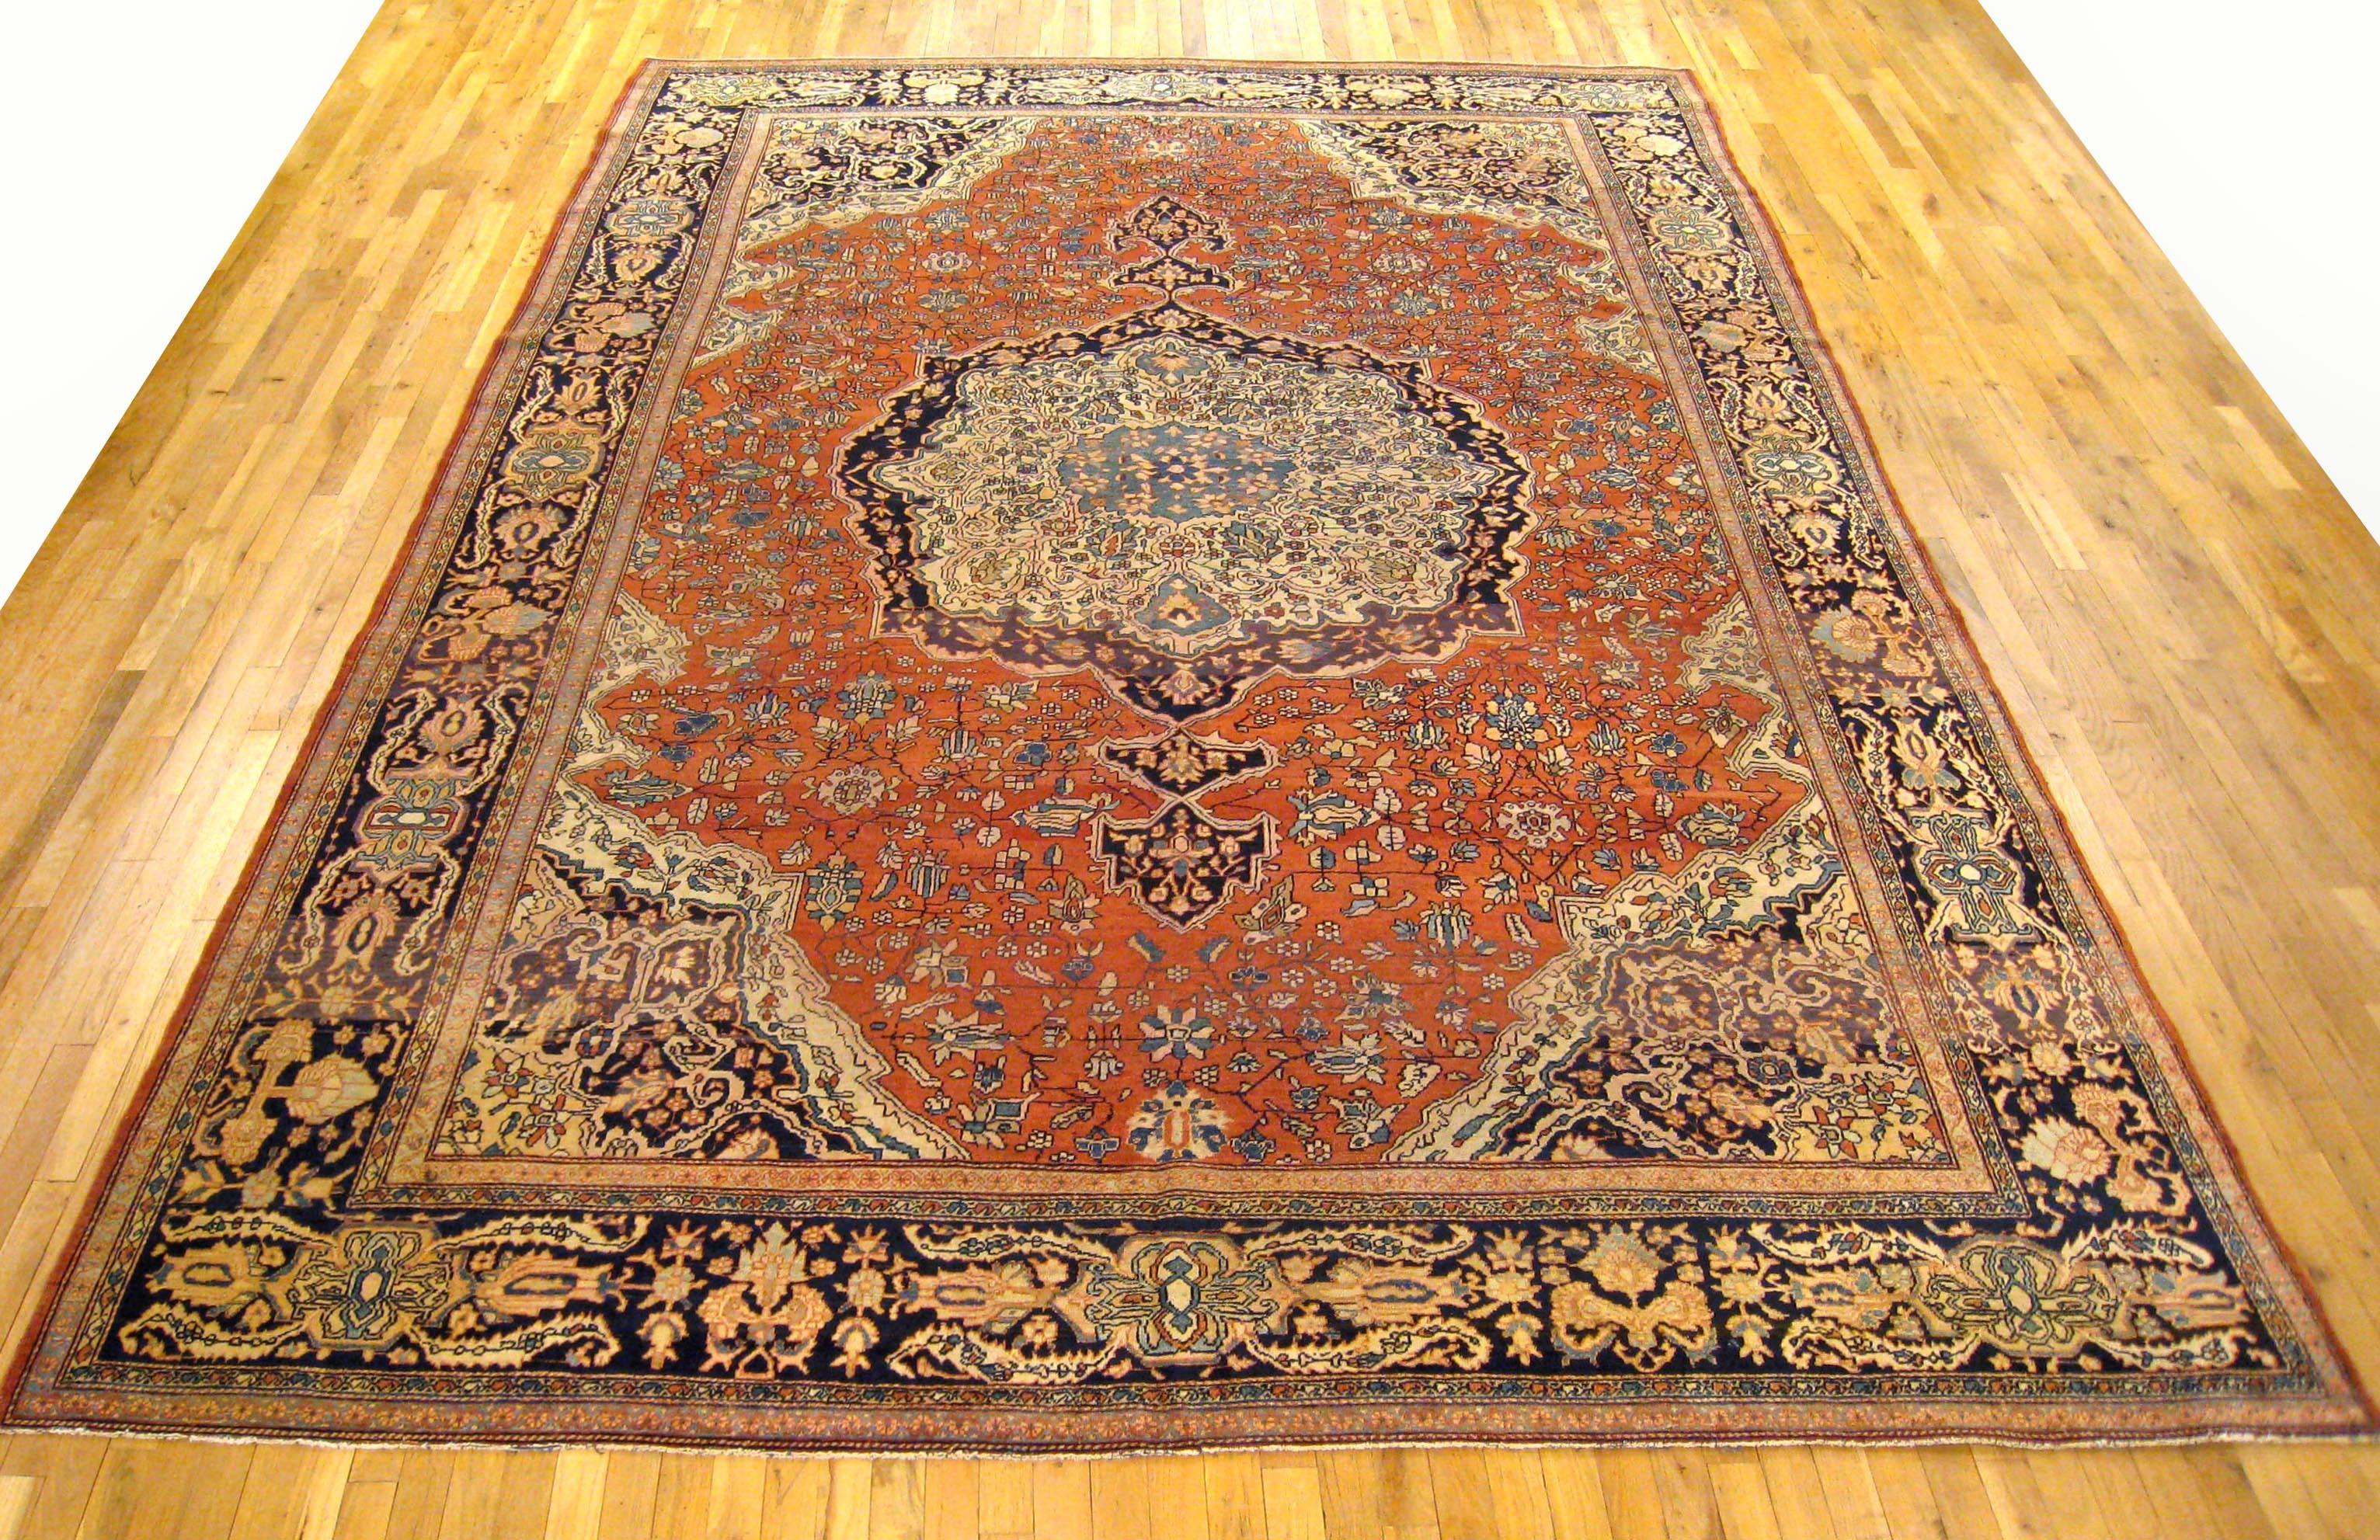 Antique Ferahan Sarouk Oriental rug, circa 1900, Room size

An antique Ferahan Sarouk oriental rug, size 12'3